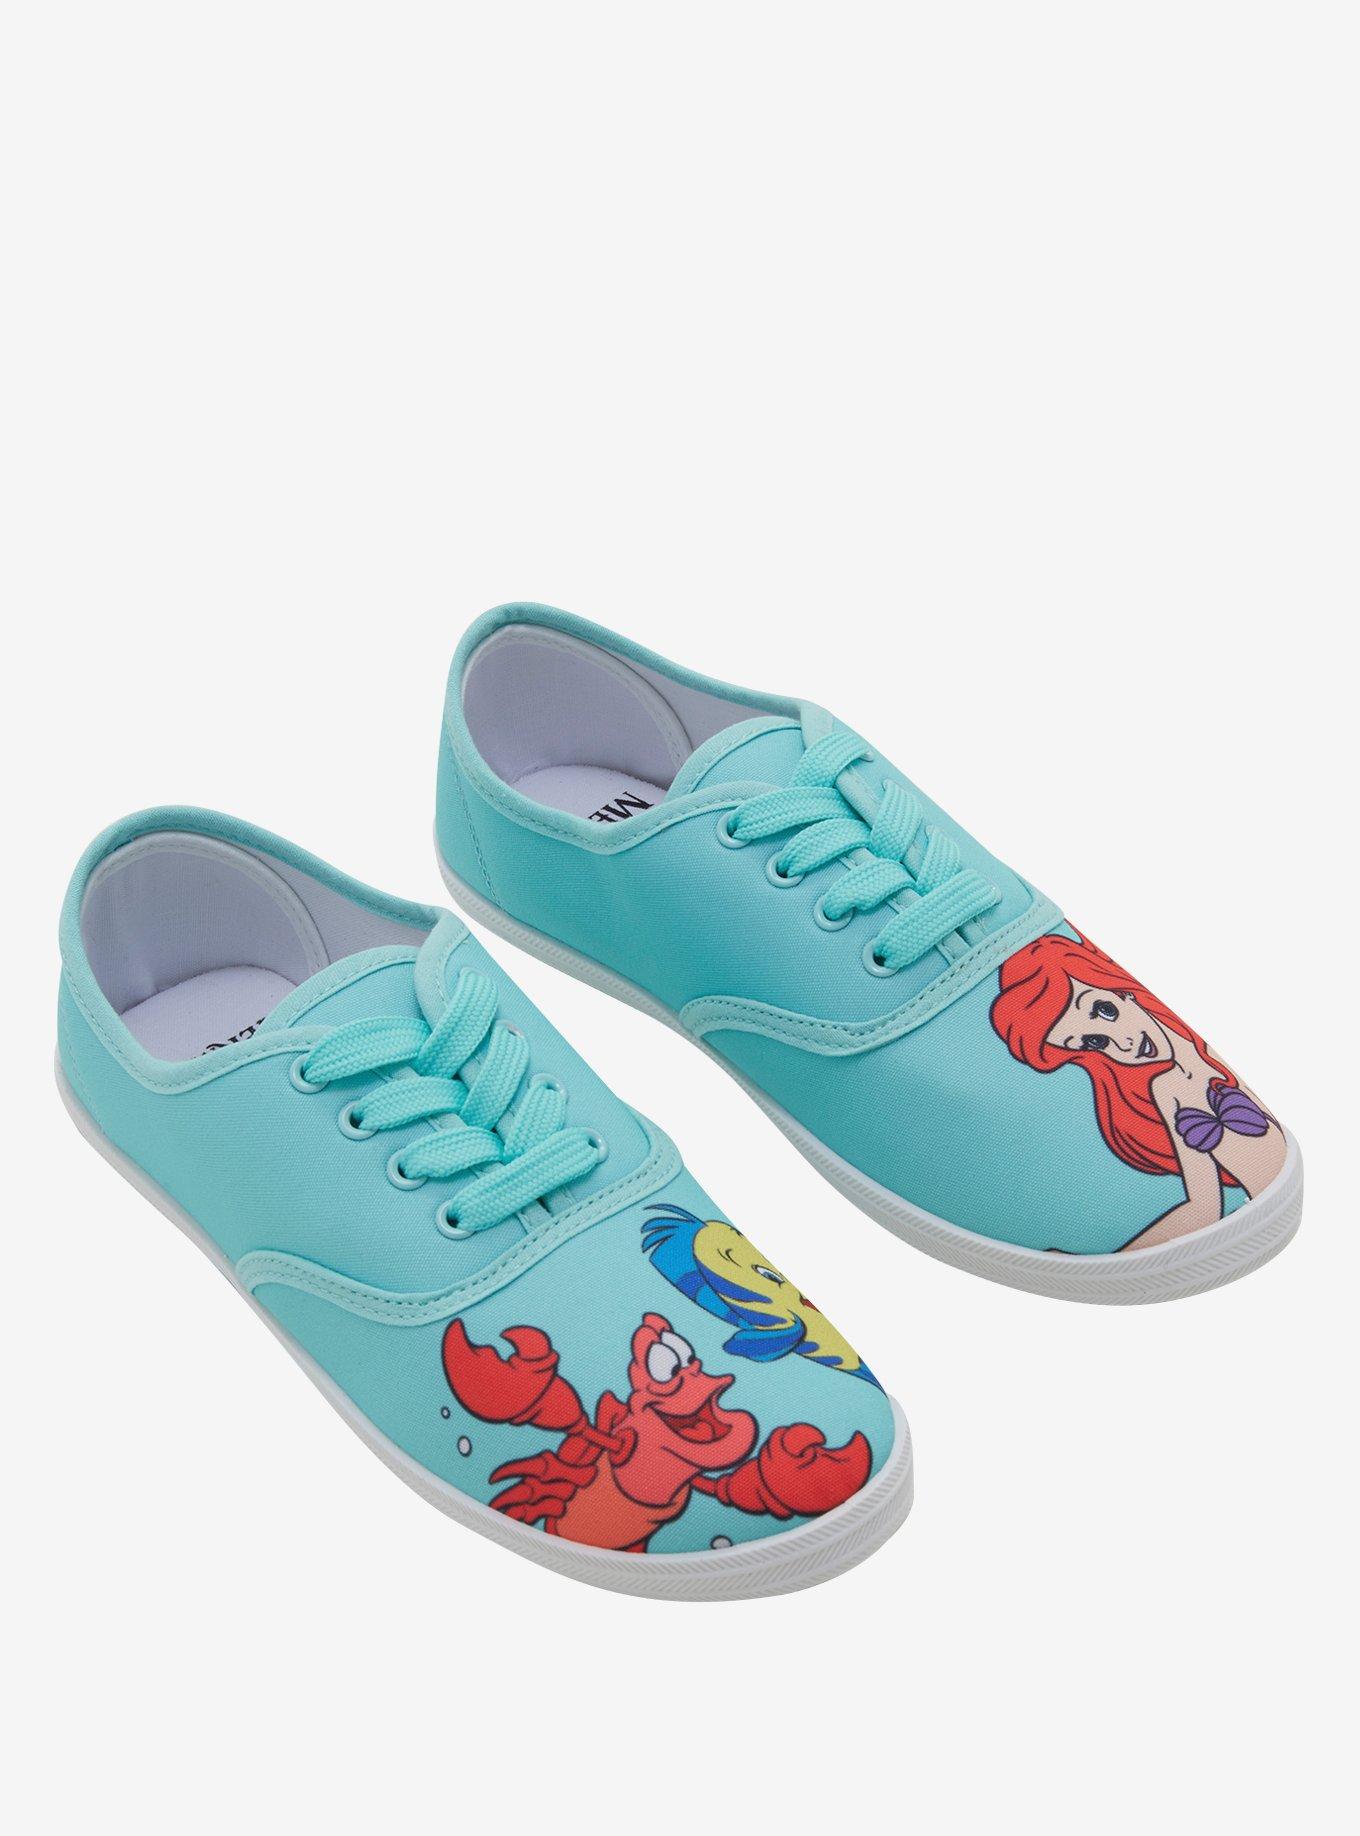 Disney The Little Mermaid Ariel Lace-Up Sneakers, MINT, alternate